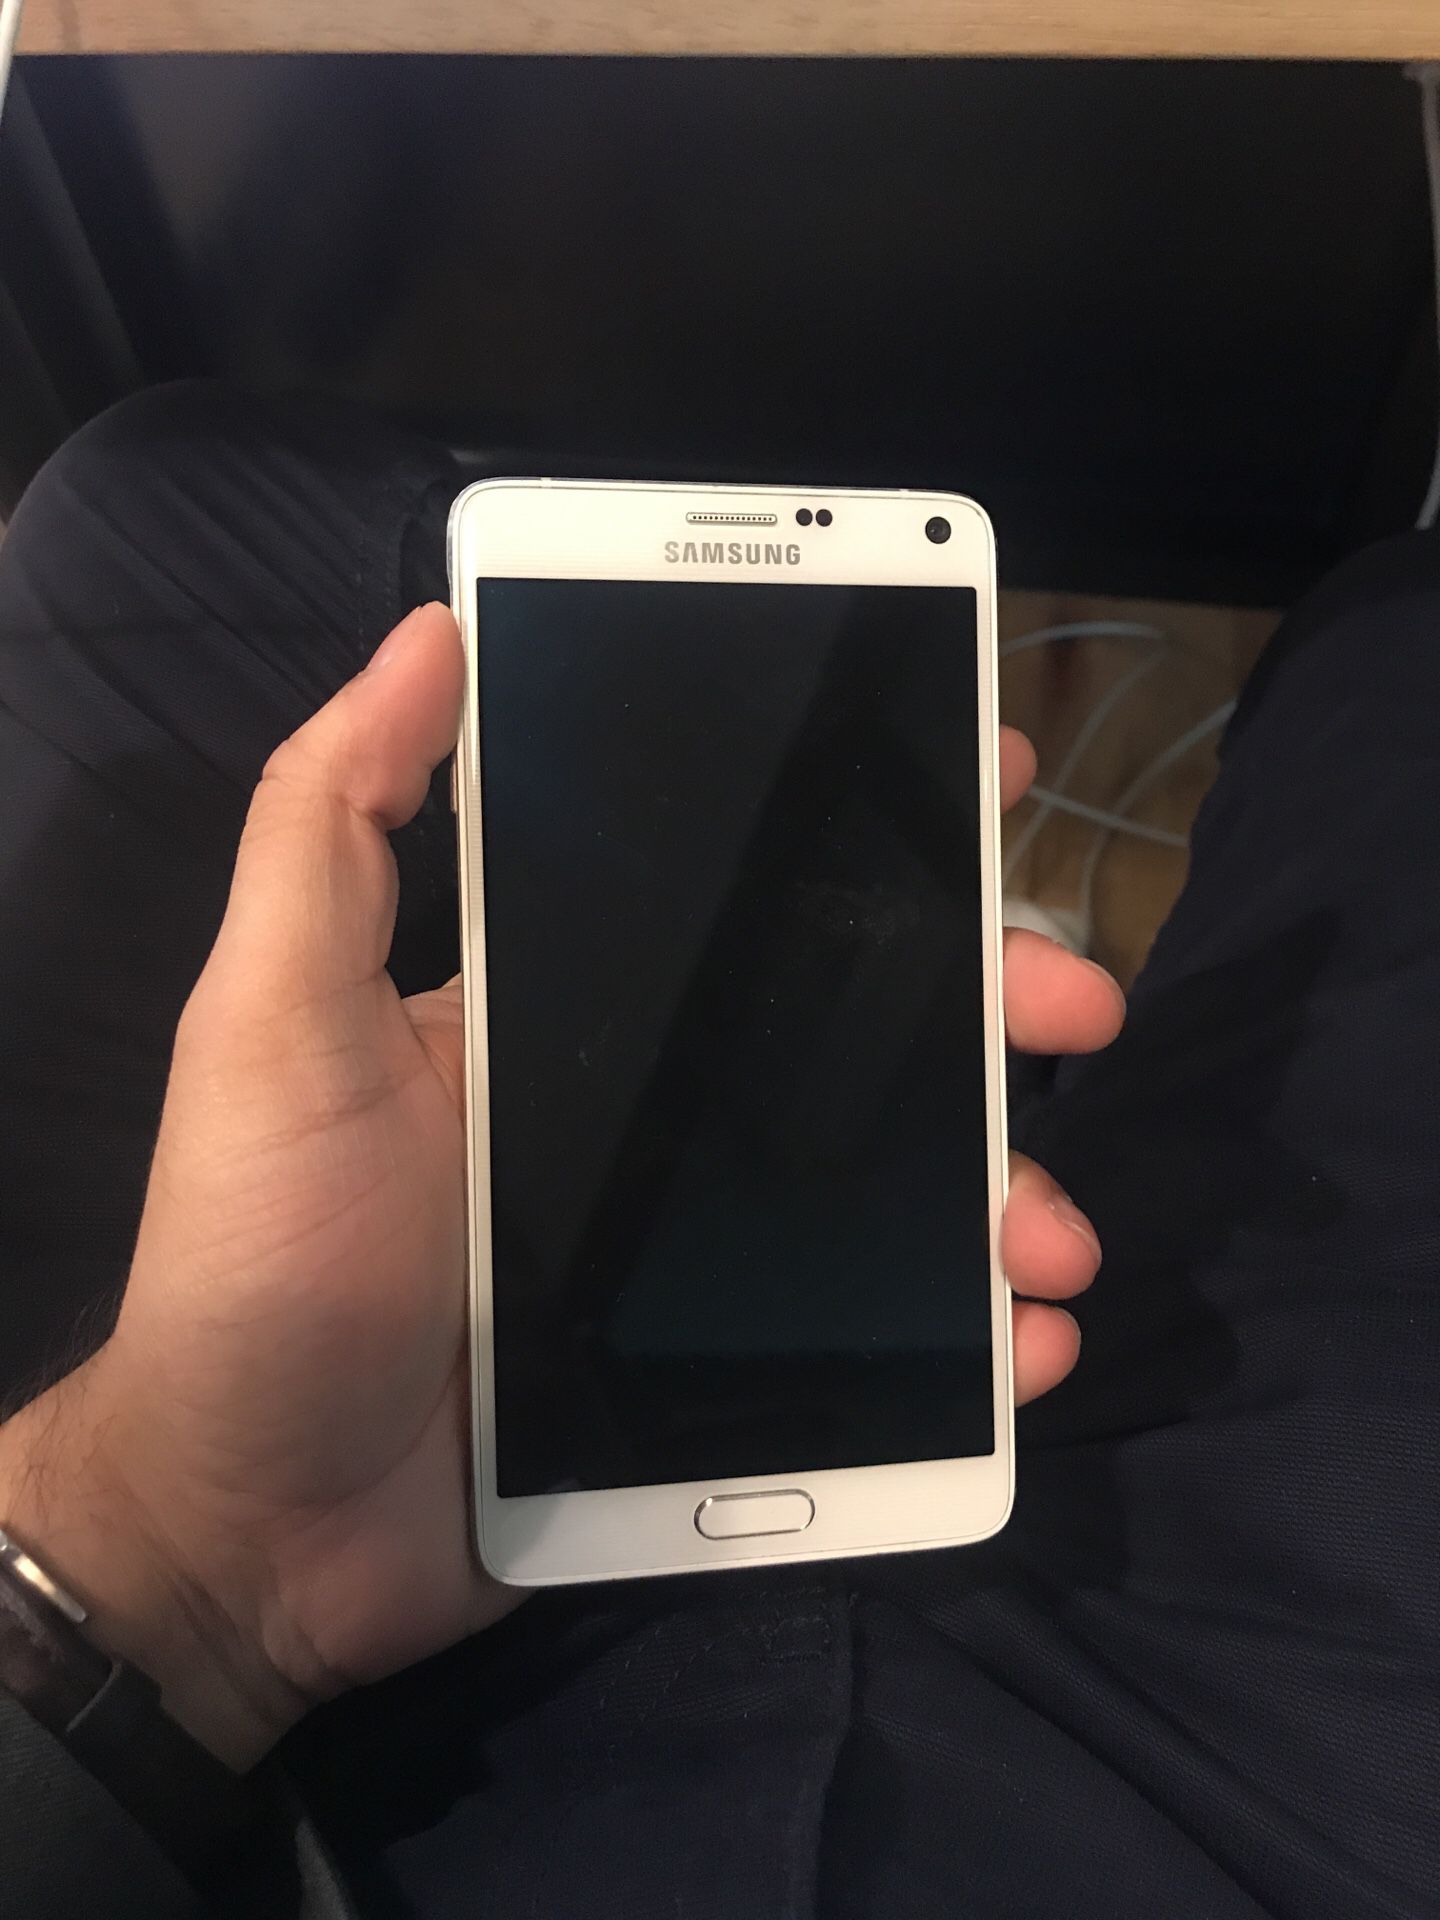 Samsung Galaxy note 4 unlocked